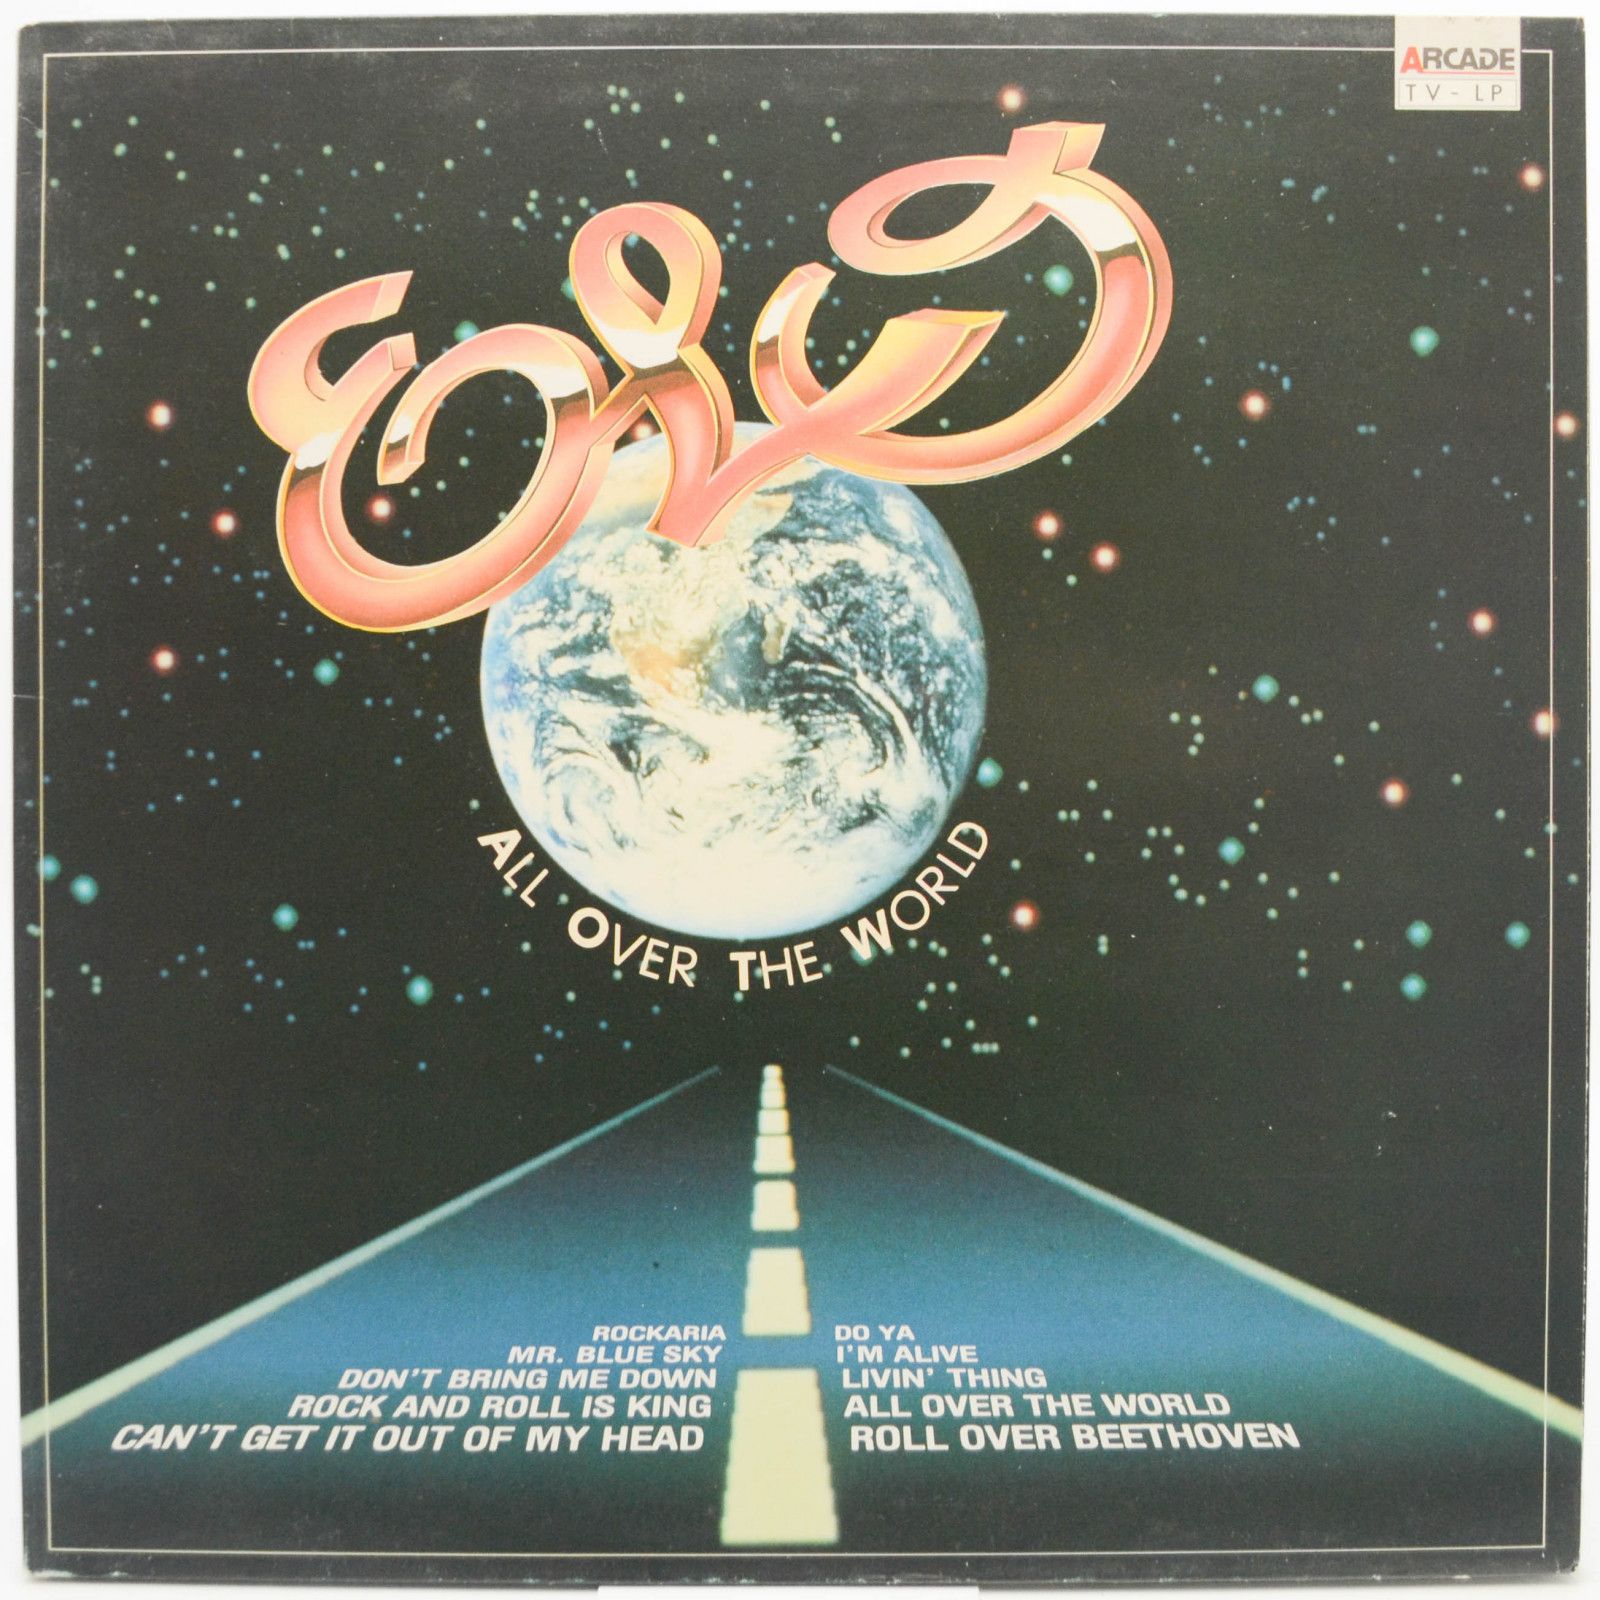 E.L.O. — All Over The World, 1987